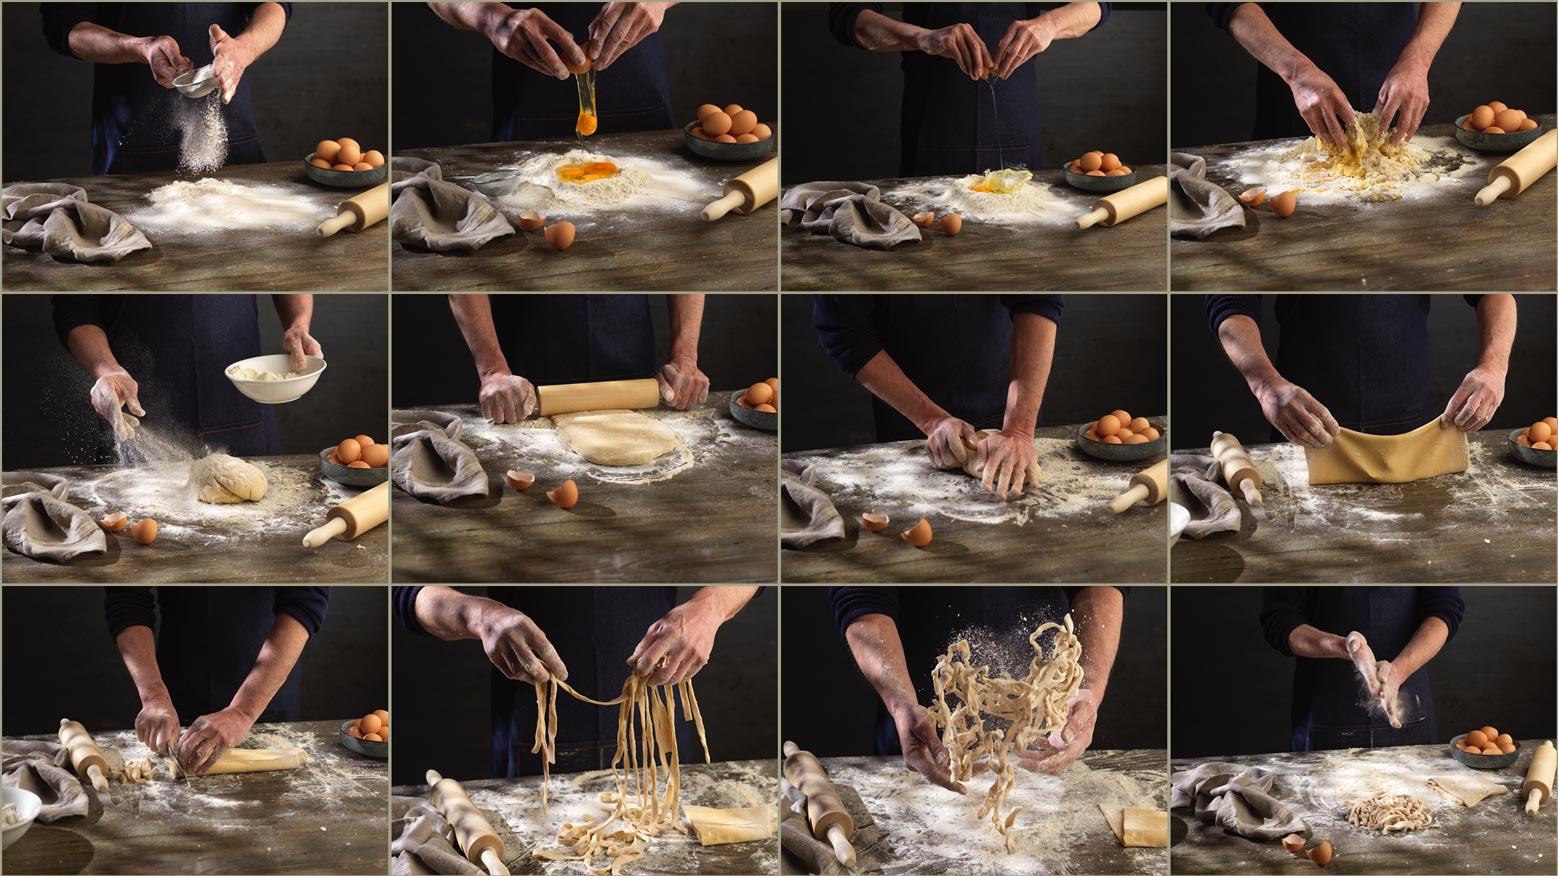 Process of making pasta